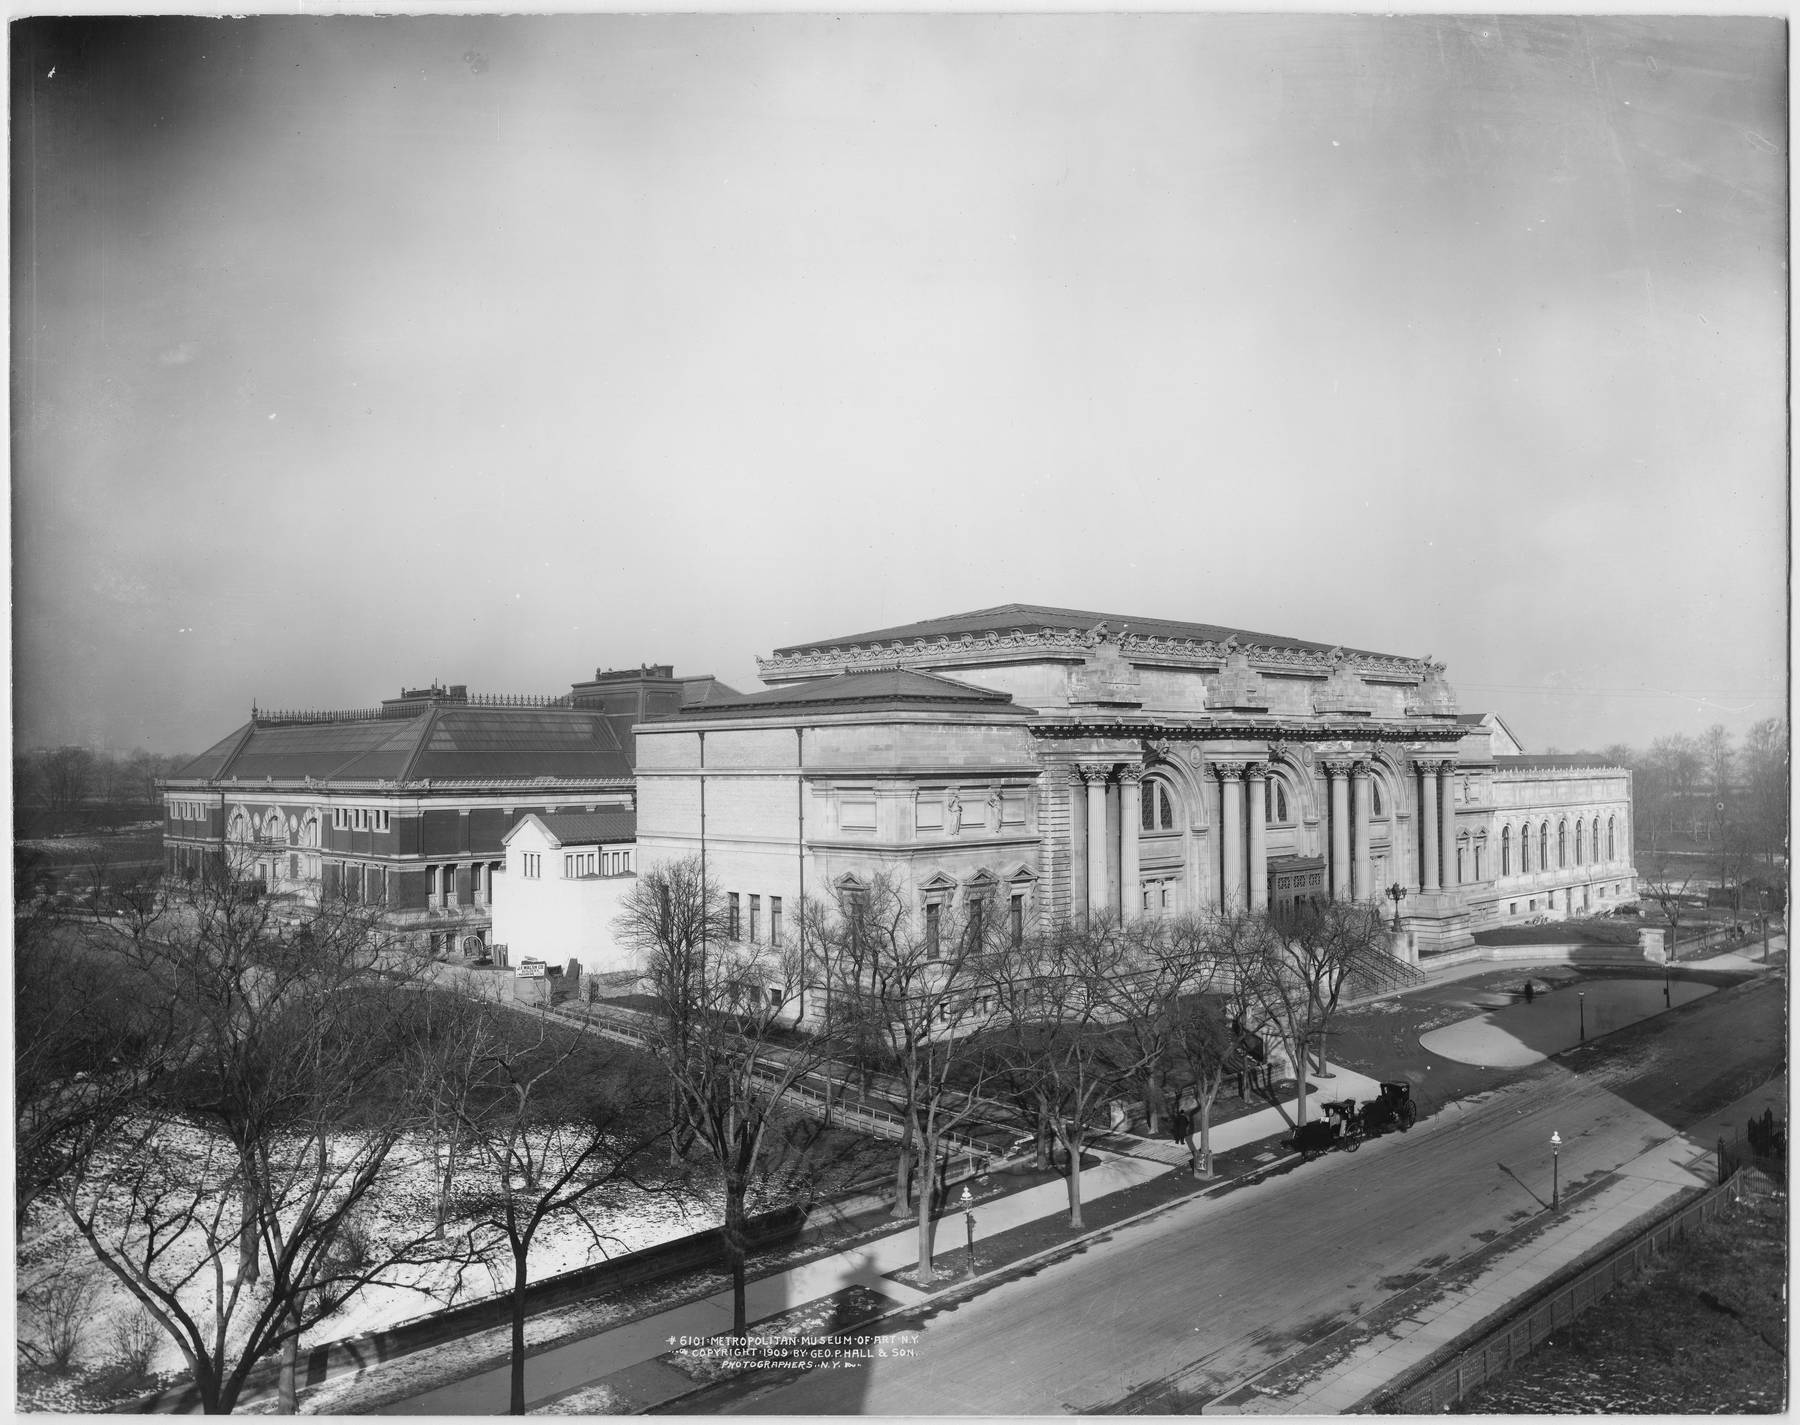 b&w photo of exterior of The Met